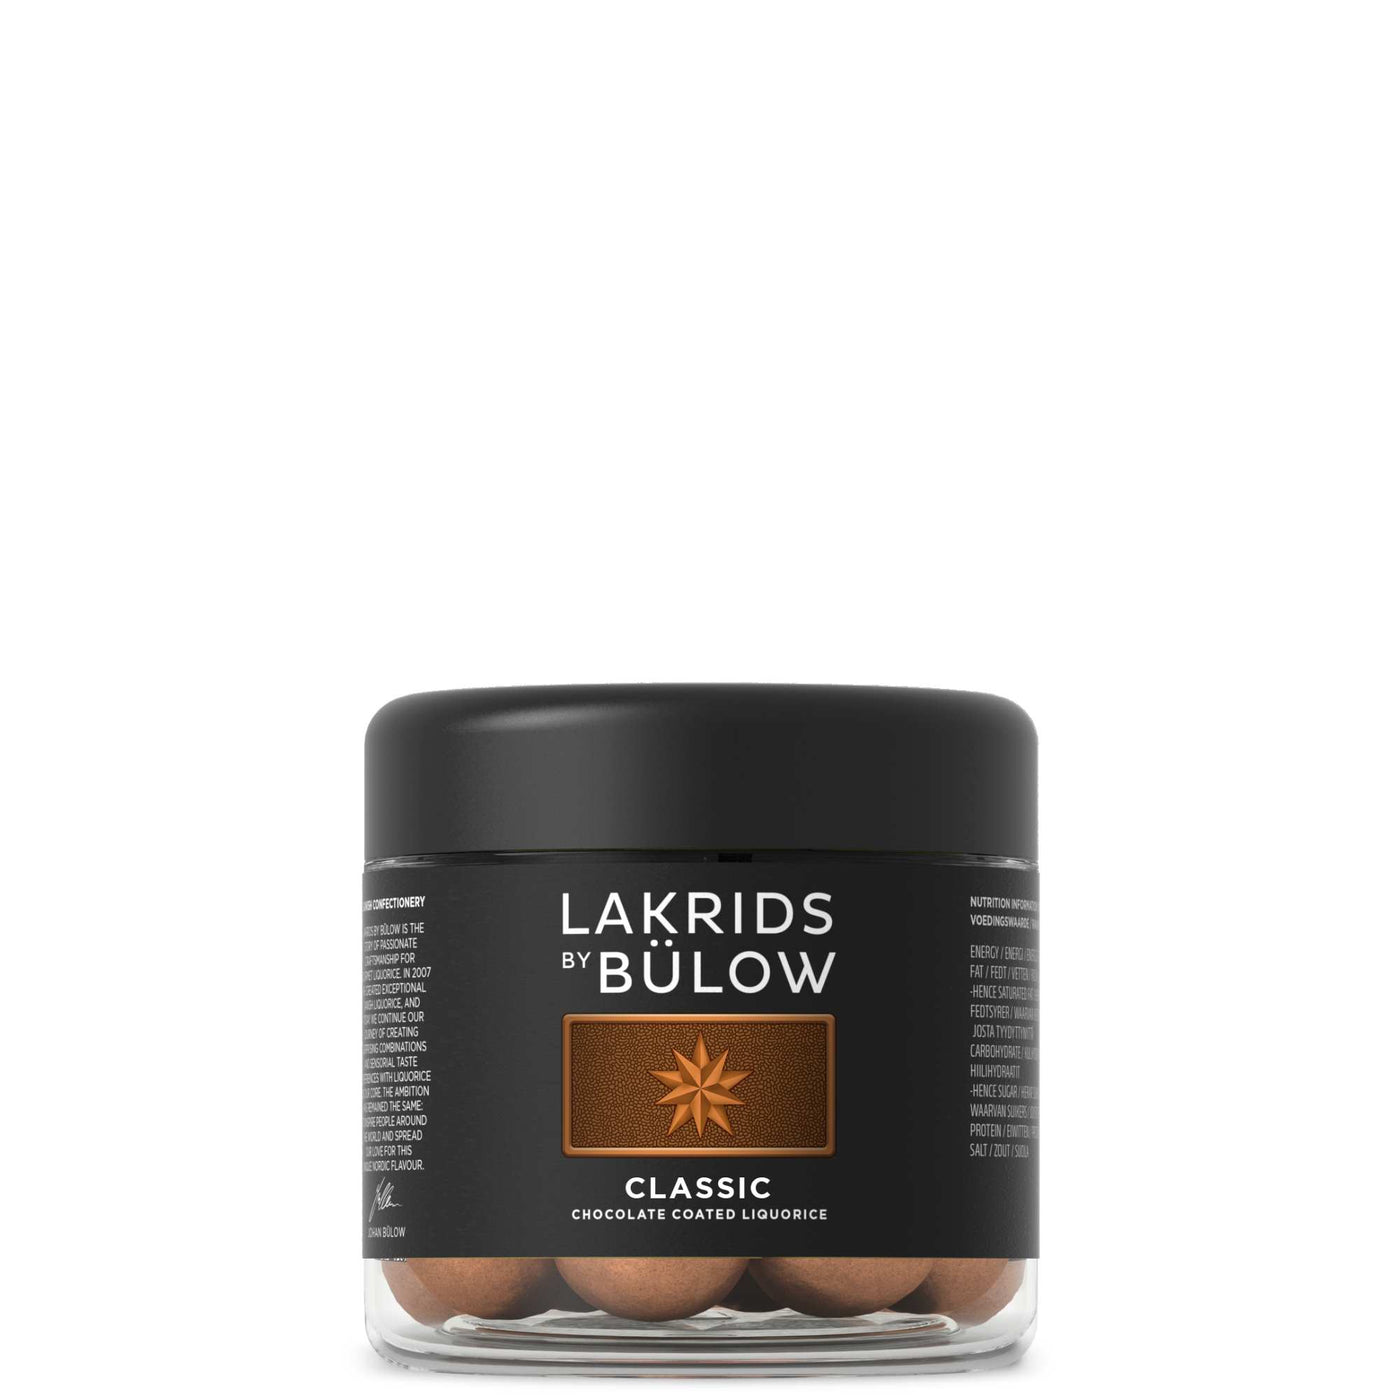 Lakrids Classic - Salty Caramel & Sea Salt Chocolate Coated Liquorice